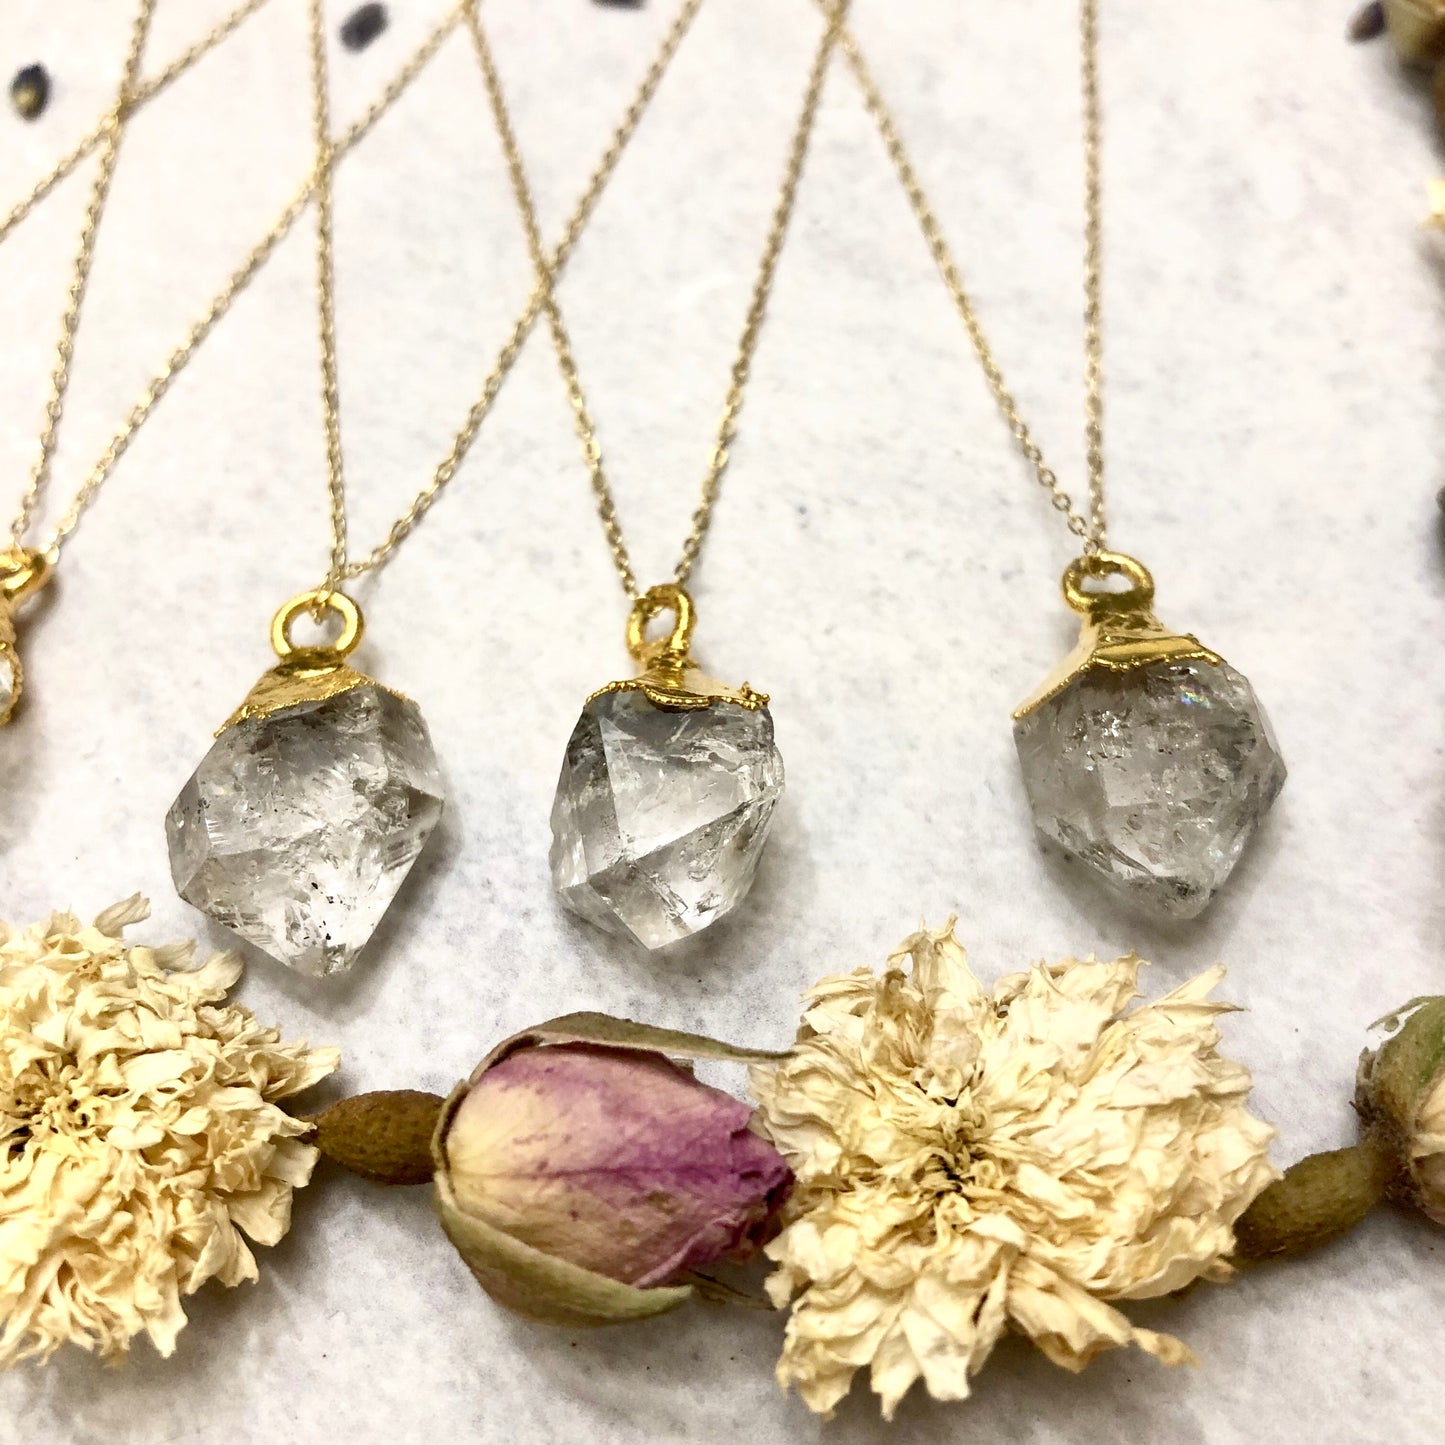 Herkimer diamond earrings with flowers below